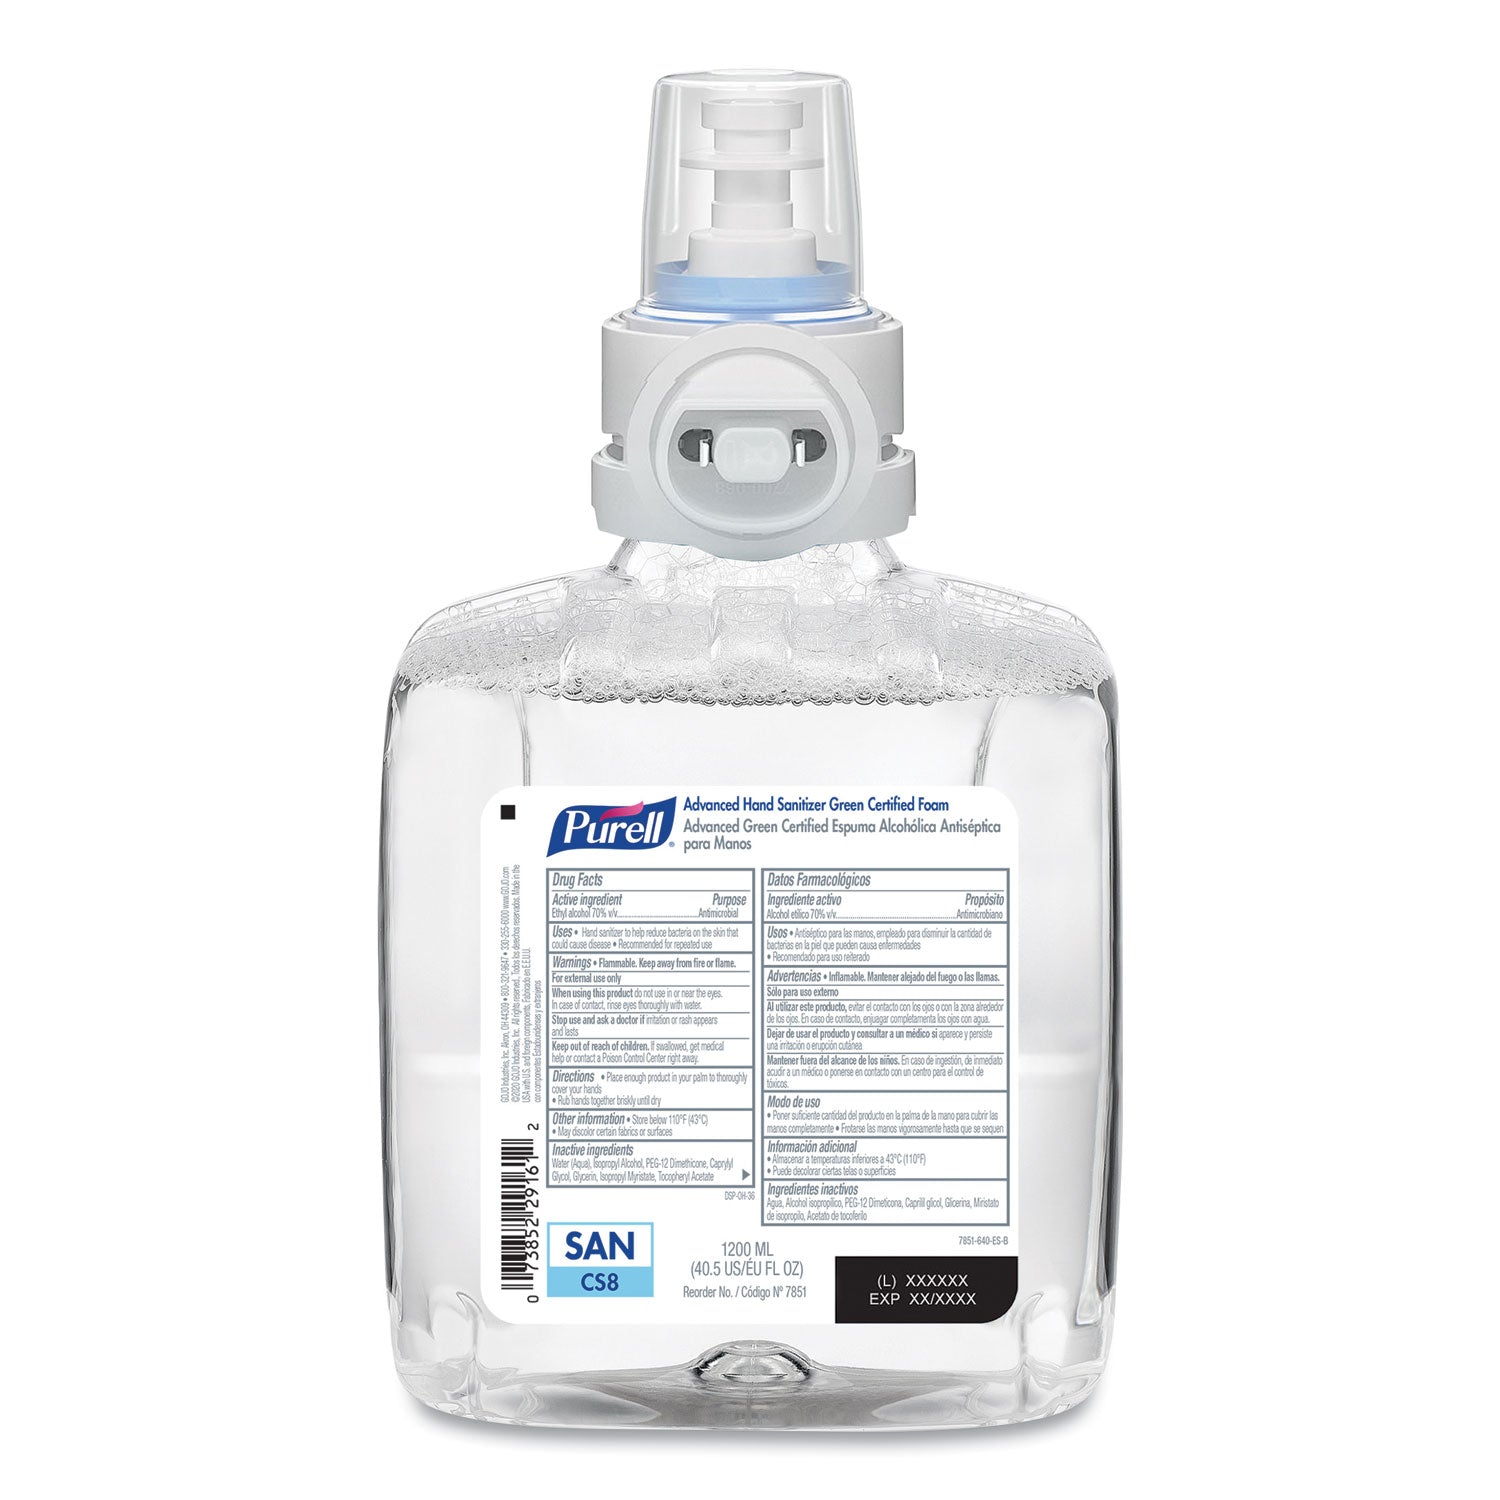 advanced-hand-sanitizer-green-certified-foam-refill-for-cs8-dispensers-1200-ml-fragrance-free-2-carton_goj785102ct - 1